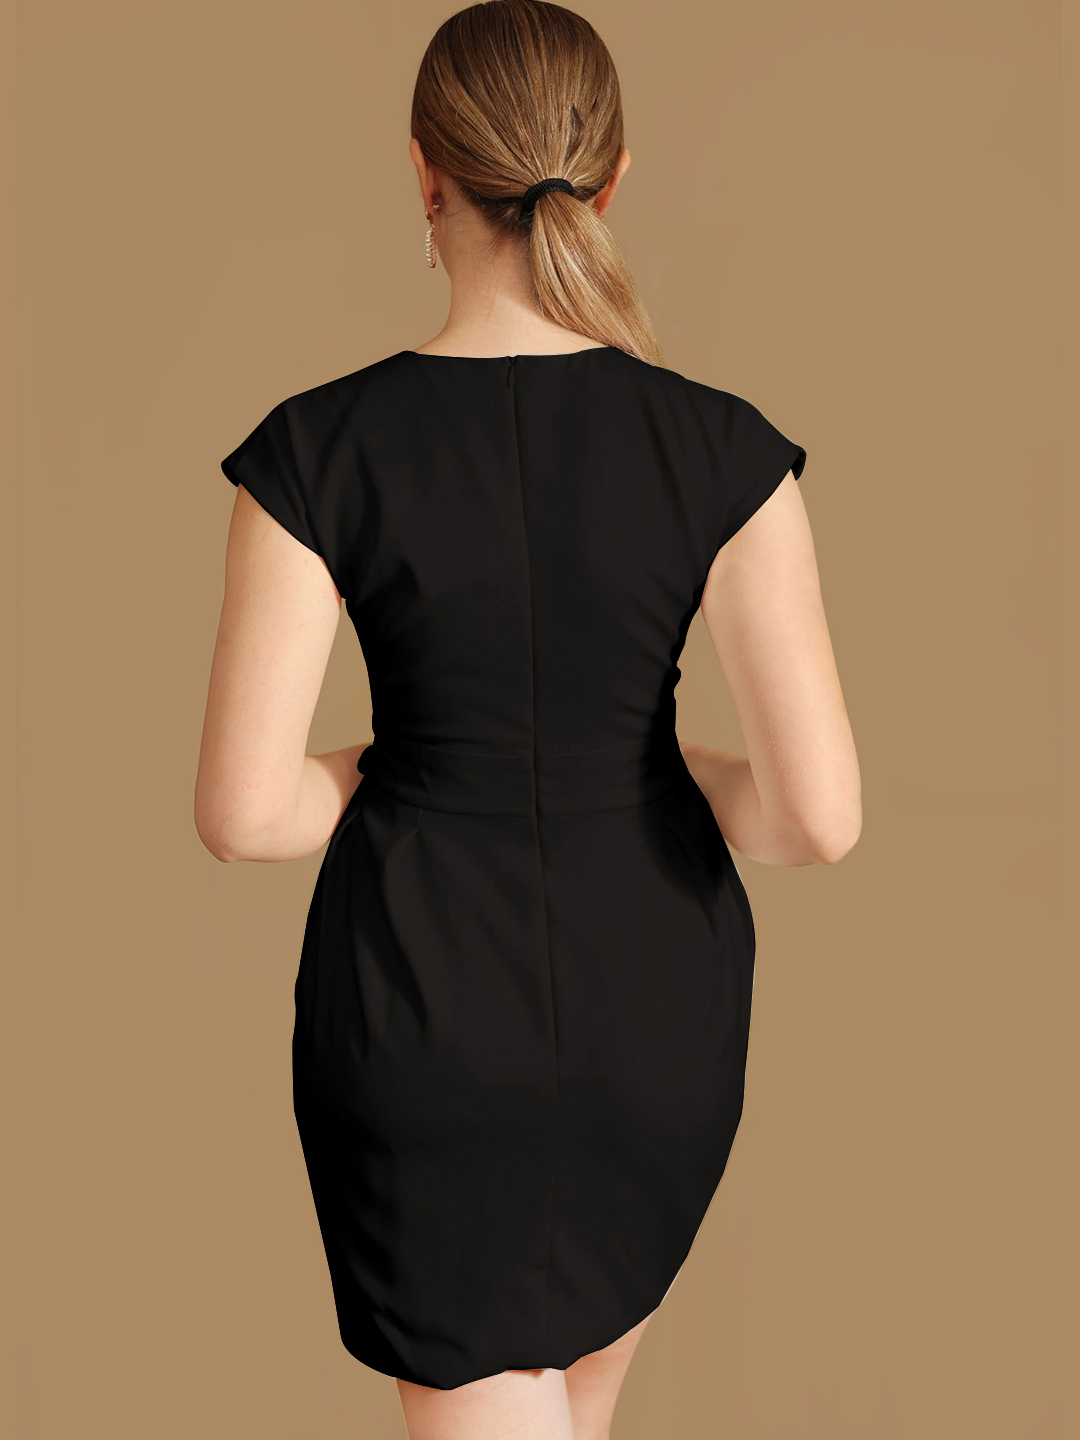 Black Straight Dress with slit hemline - Back